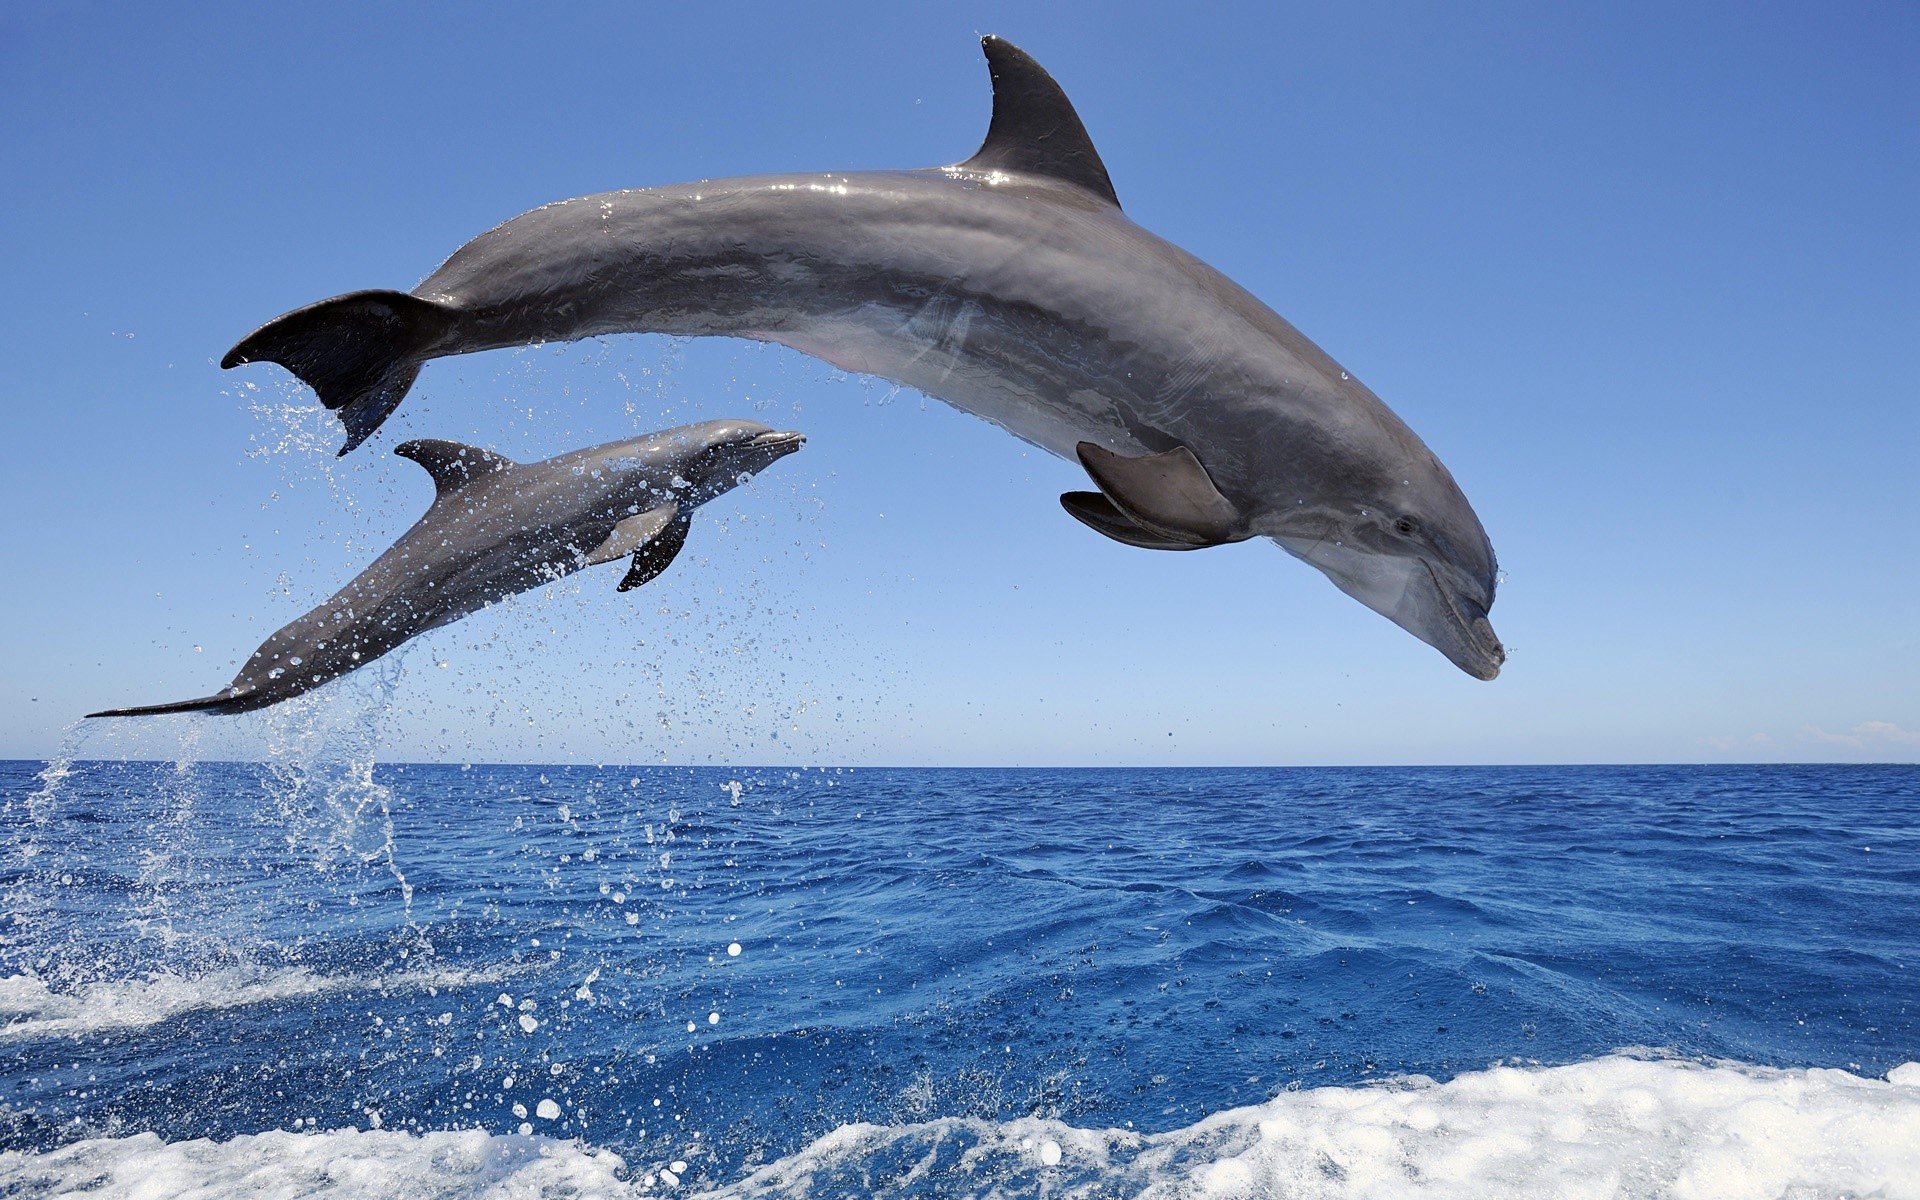 Fondos de pantalla Delfines saltando del agua